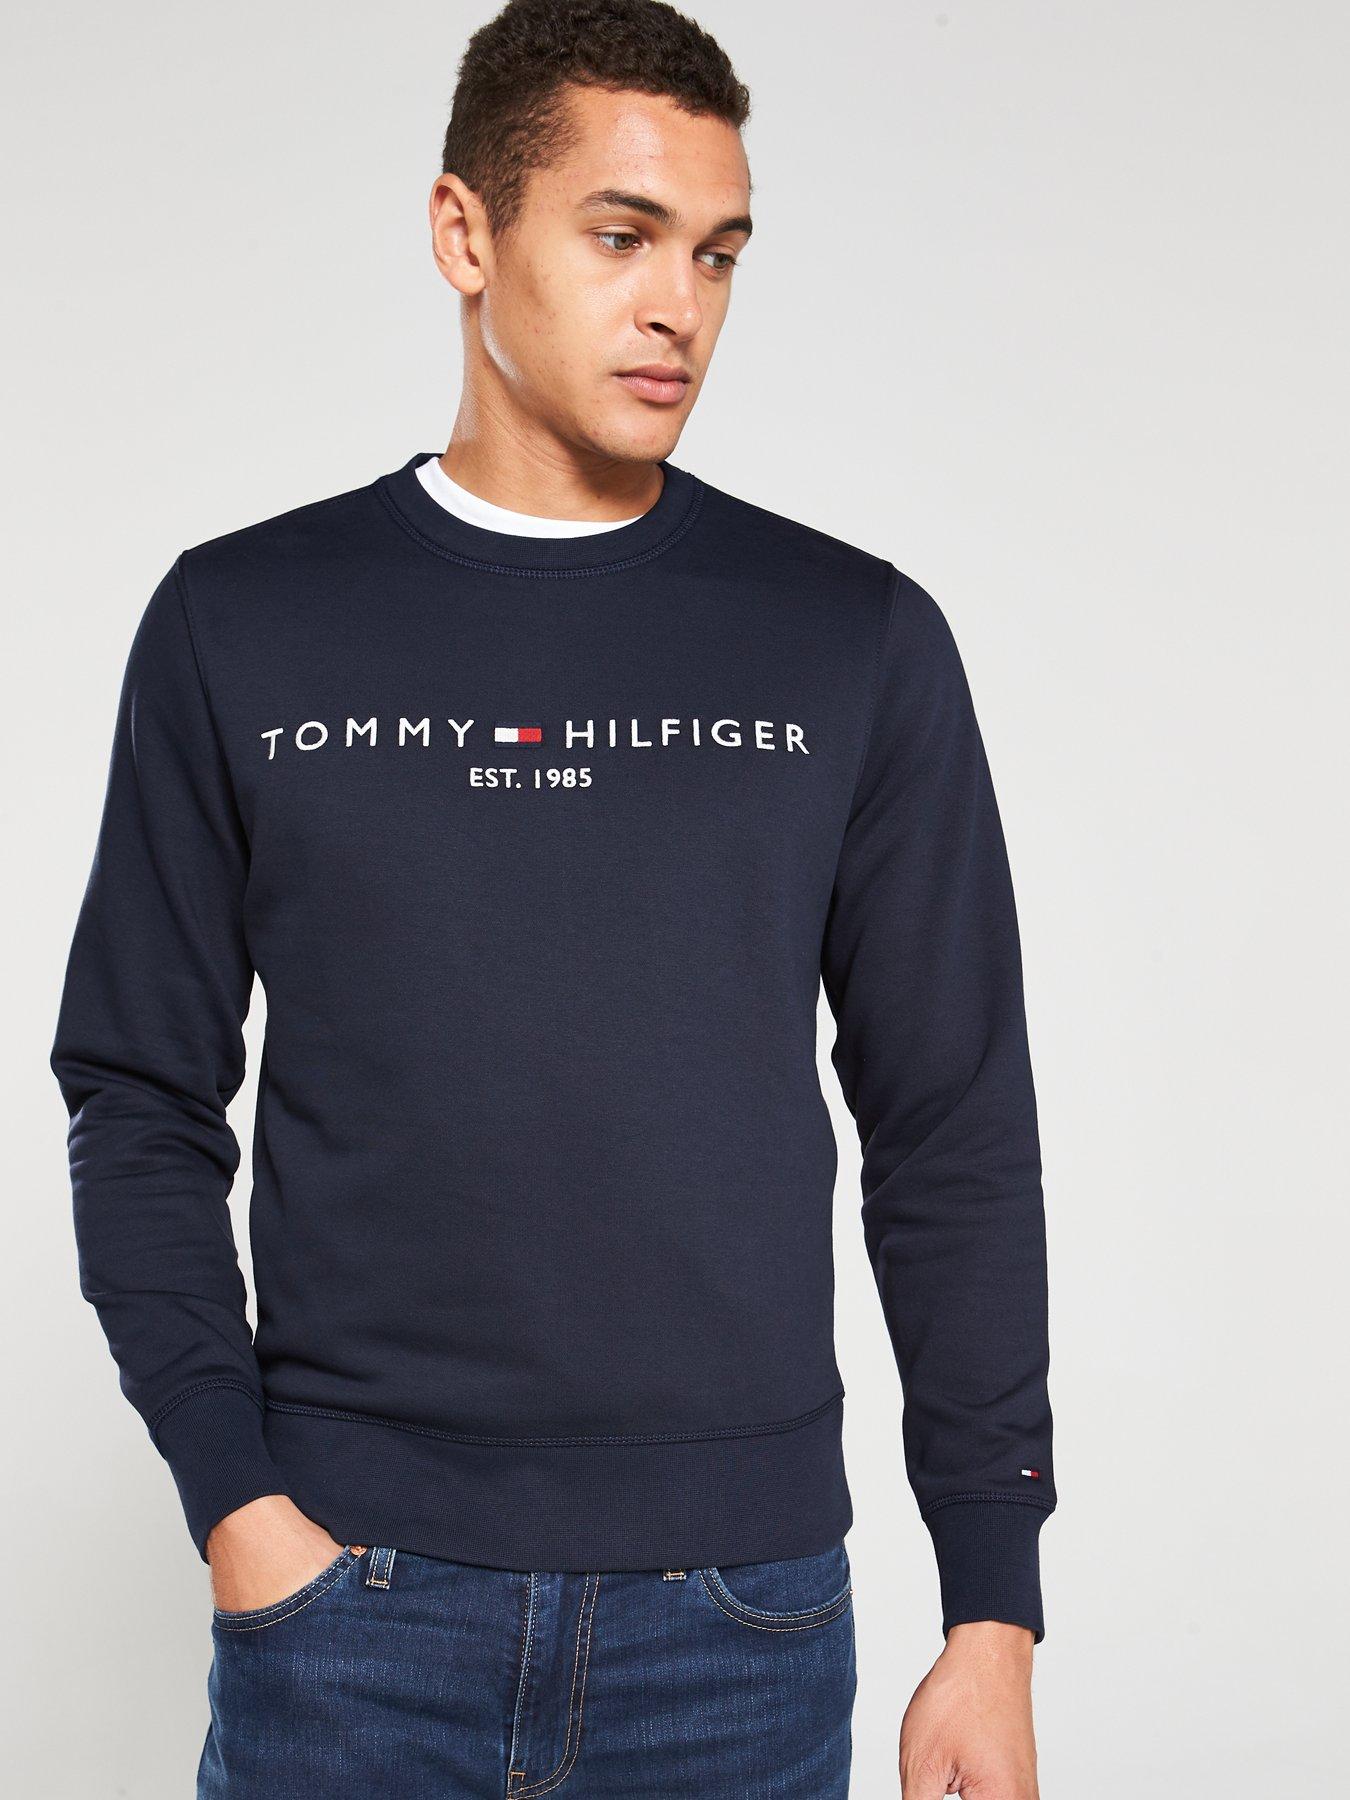 tommy hilfiger logo sweatshirt mens